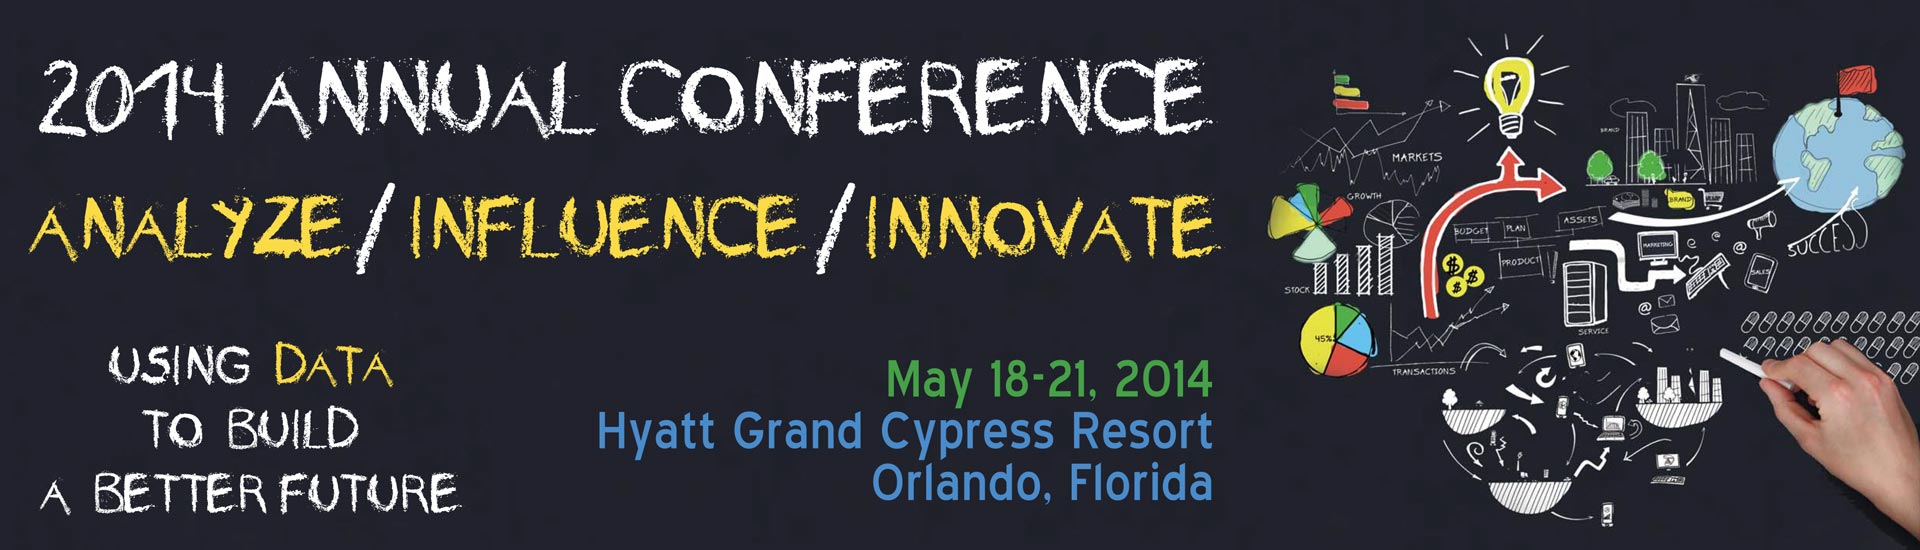 2014 Annual Conference • Orlando, Florida • May 18-21